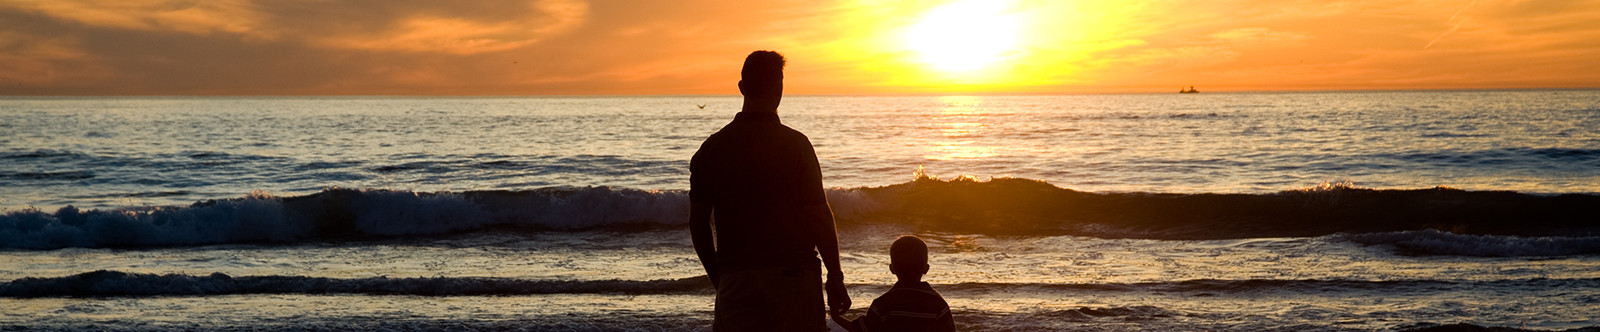 man and child watching sunset